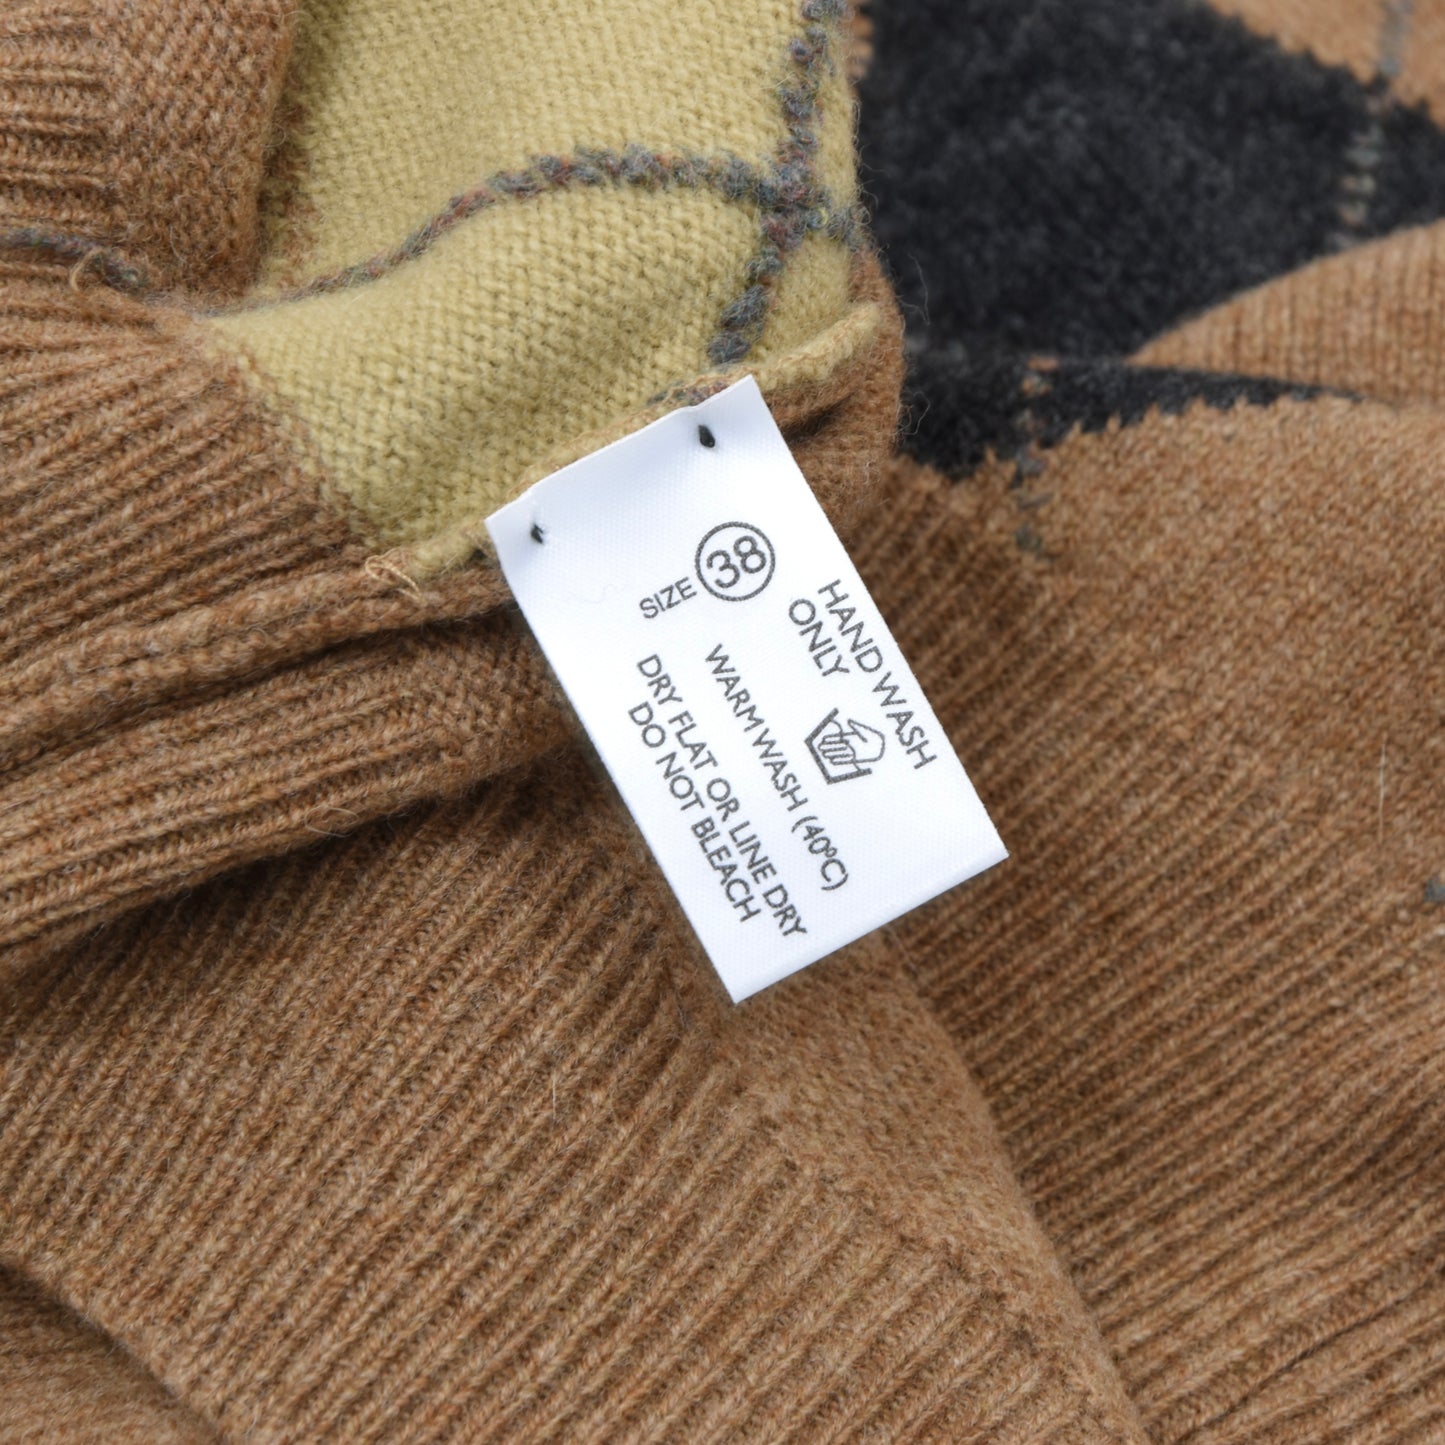 Peter Scott Wool Sweater Size UK38 Chest ca. 54cm - Tan Argyle